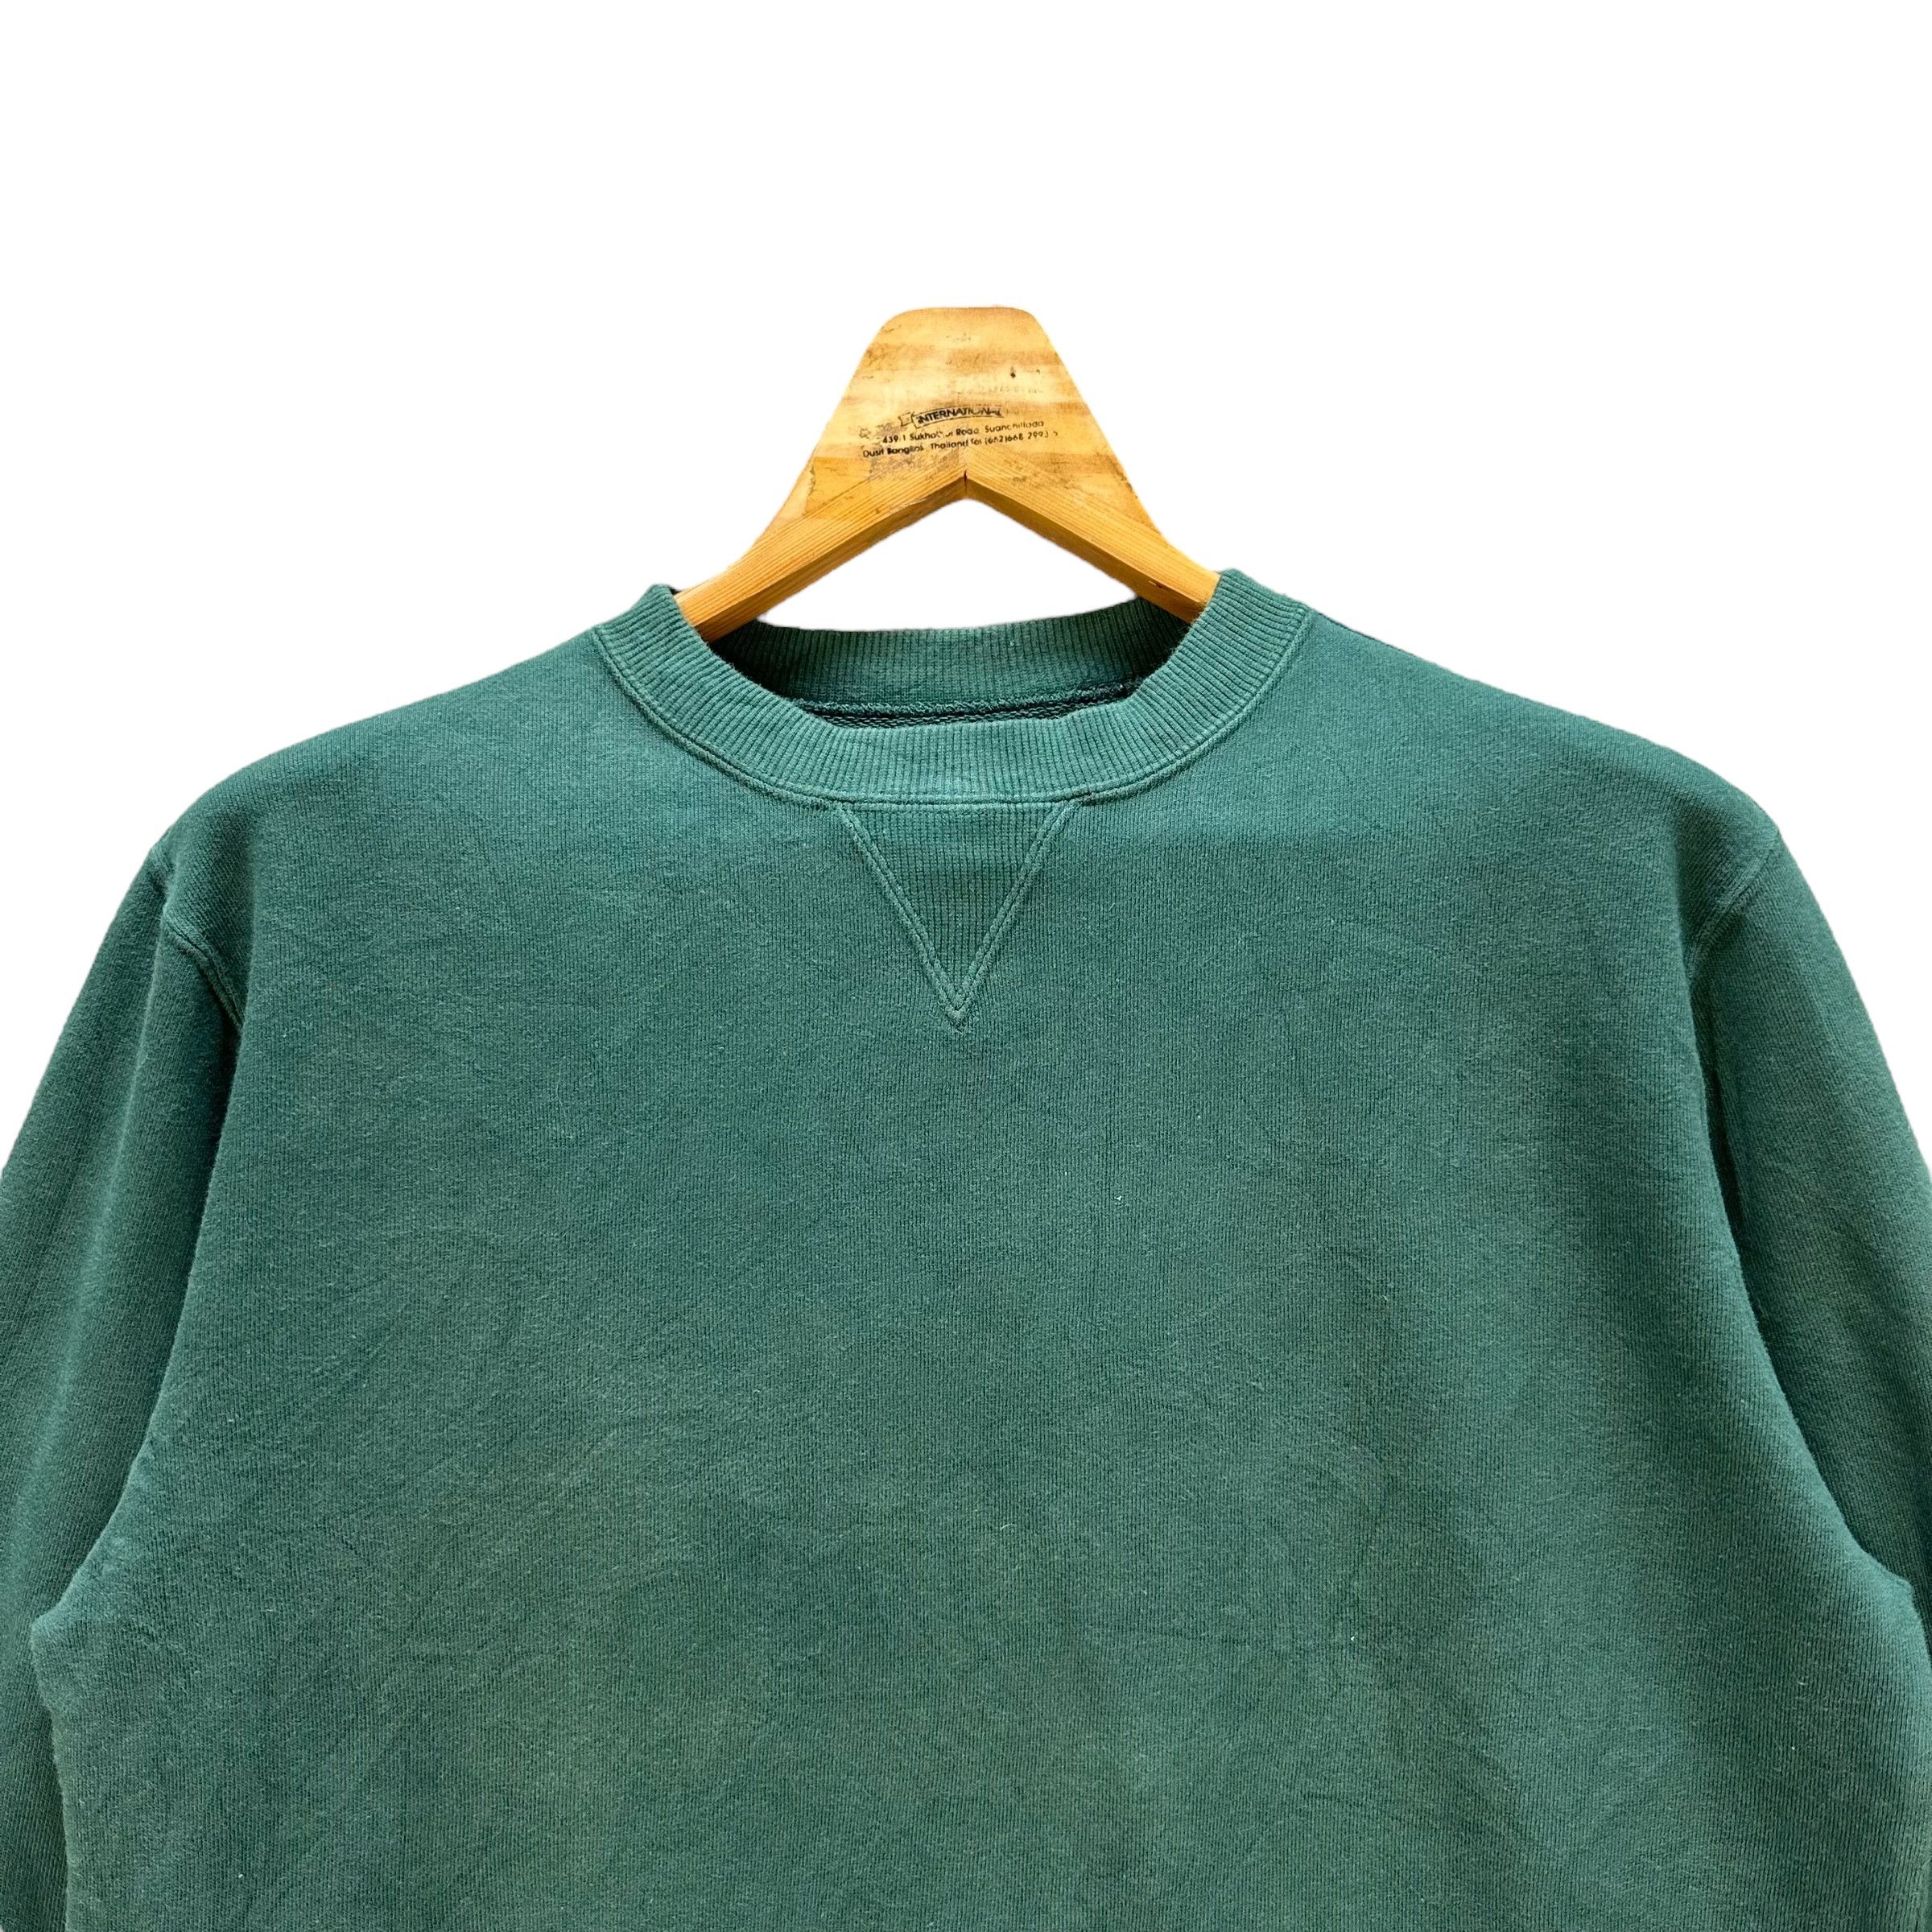 Champion Green Sweatshirts #9125-59 - 2